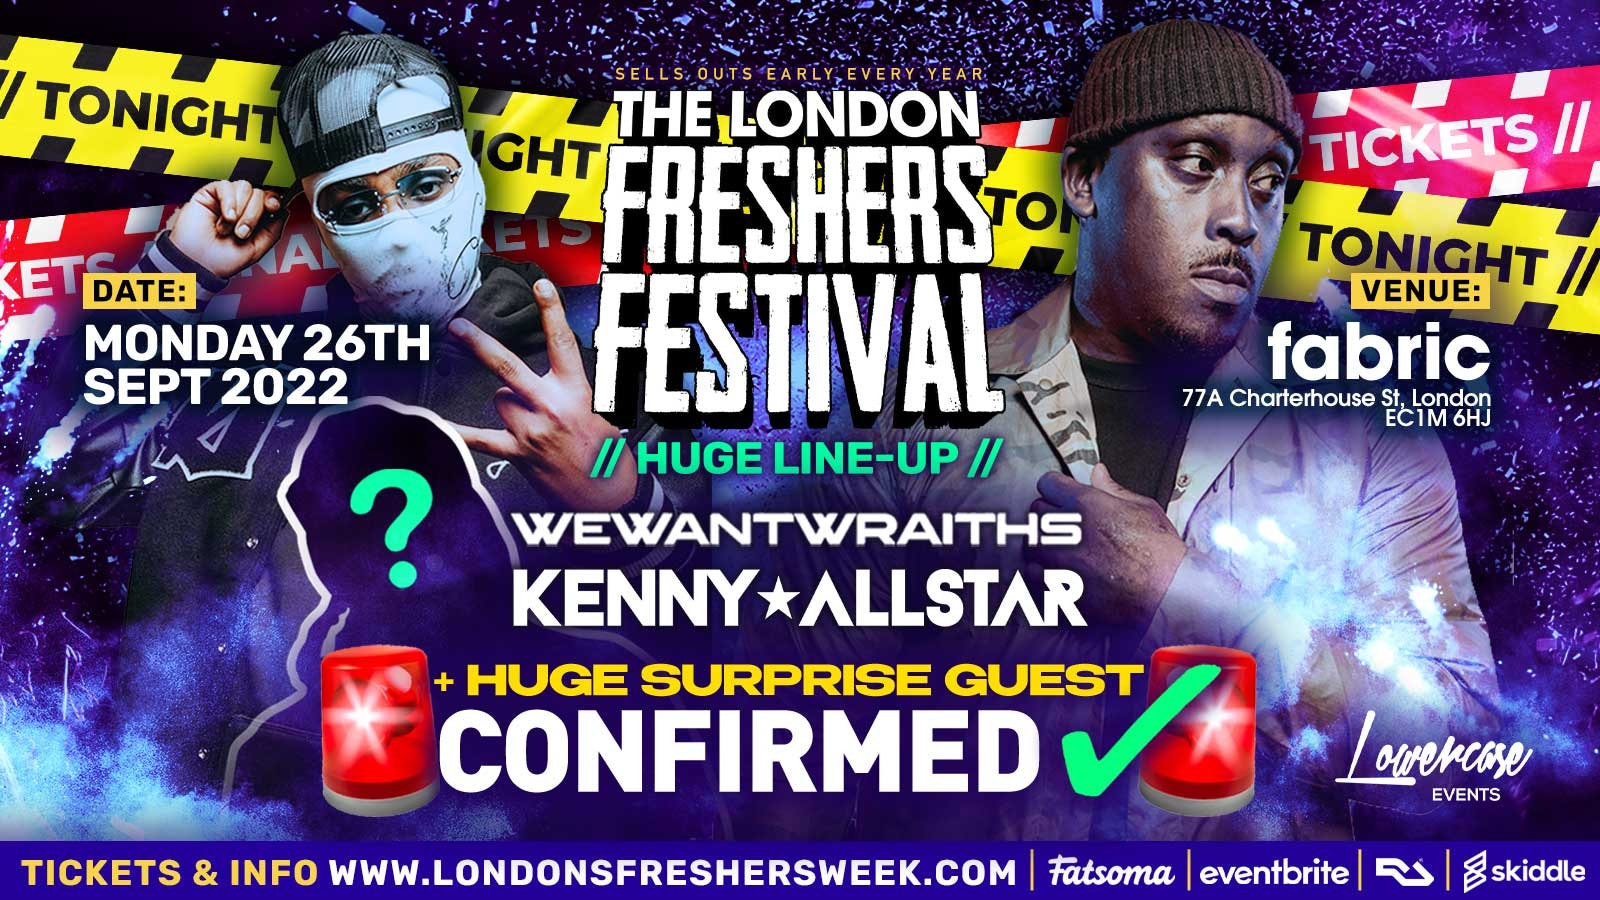 THE LONDON FRESHERS FESTIVAL @ FABRIC FT WEWANTWRAITHS + KENNY ALLSTAR! LONDON FRESHERS WEEK 2022 – [FRESHERS WEEK 2]